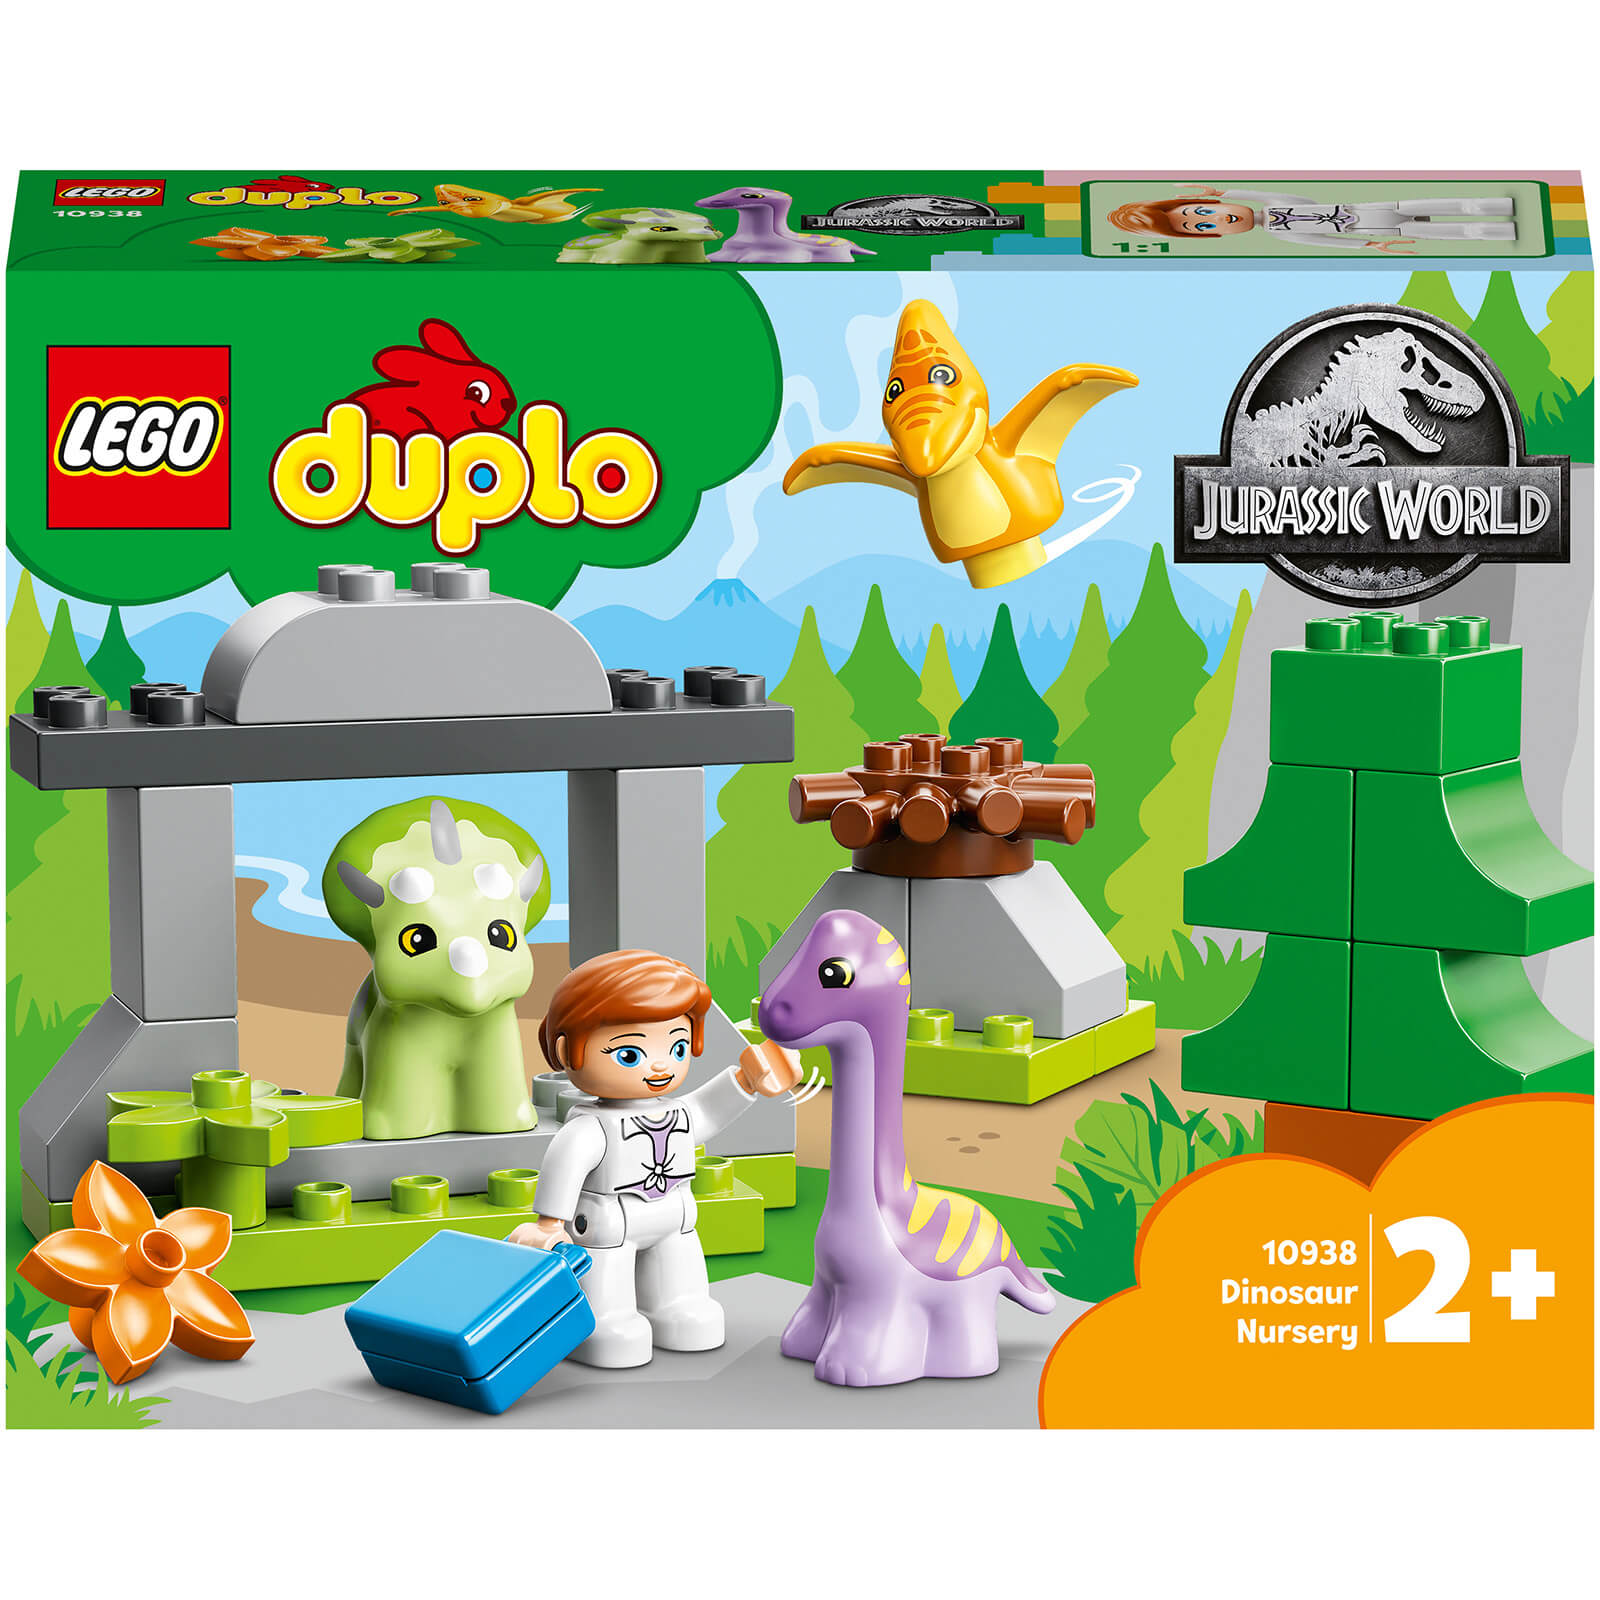 DUPLO Jurassic World: Dinosaur Nursery Toy - 10938